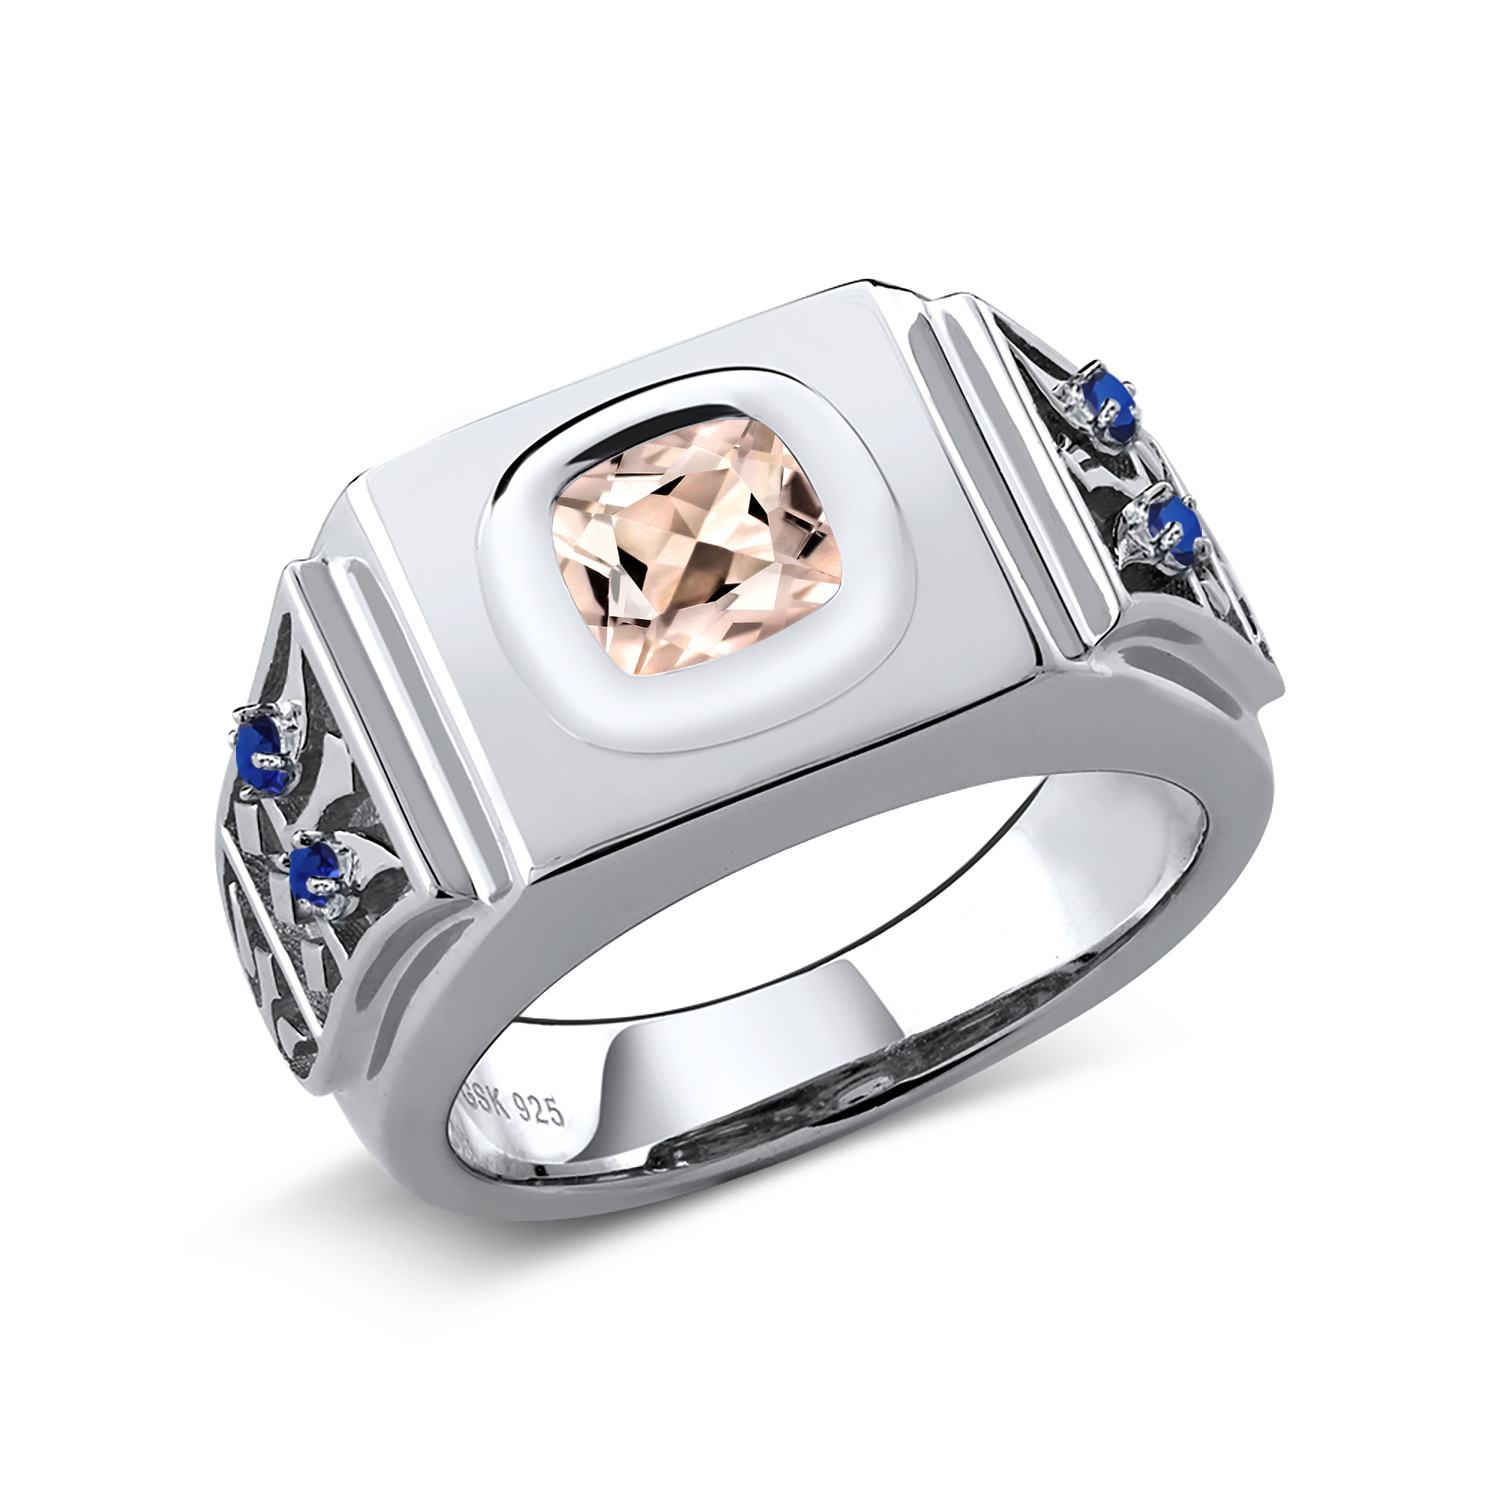 Gem Stone King 1.92 Ct Peach Morganite Blue Created Sapphire 925 Sterling Silver Men's Ring